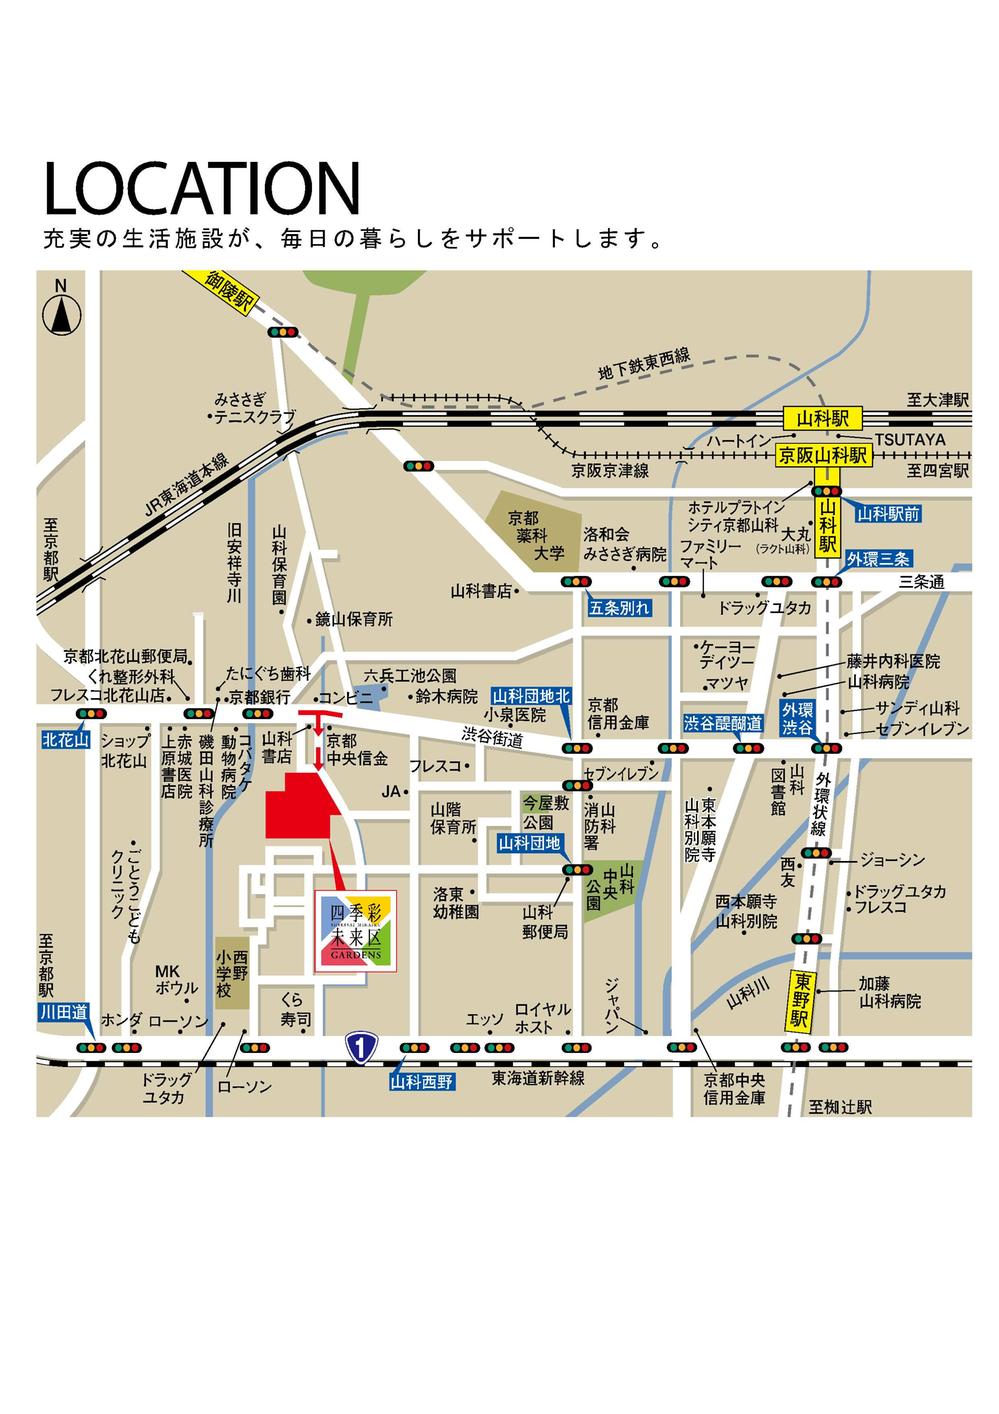 Other. JR ・ subway ・ Keihan 3WAY access. 